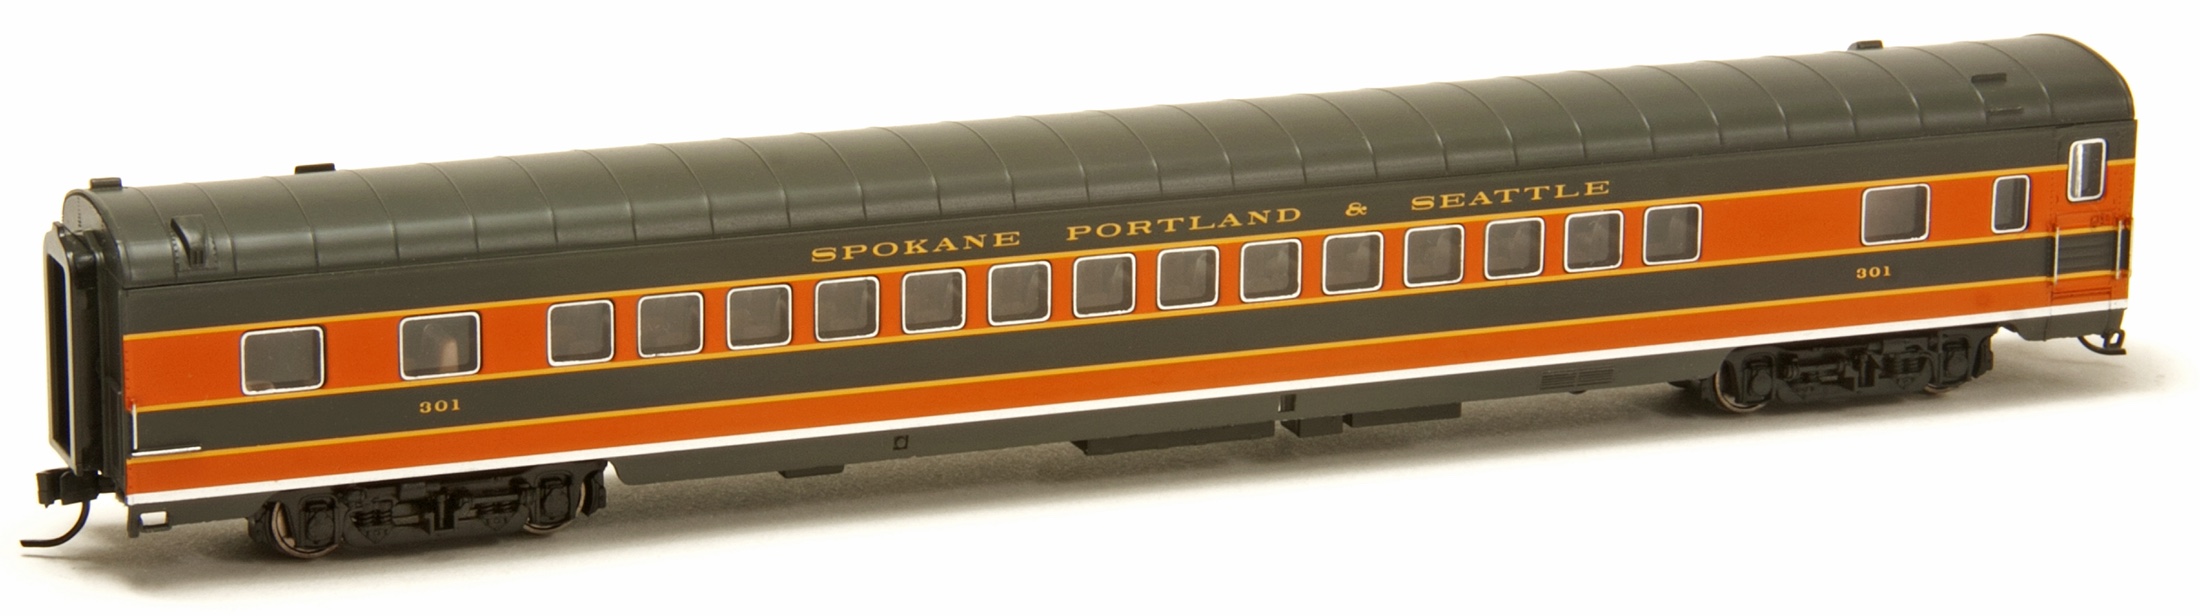 N Scale - RailSmith - 75114 - Passenger Car, Lightweight, Pullman, Coach - Spokane Portland & Seattle - 301